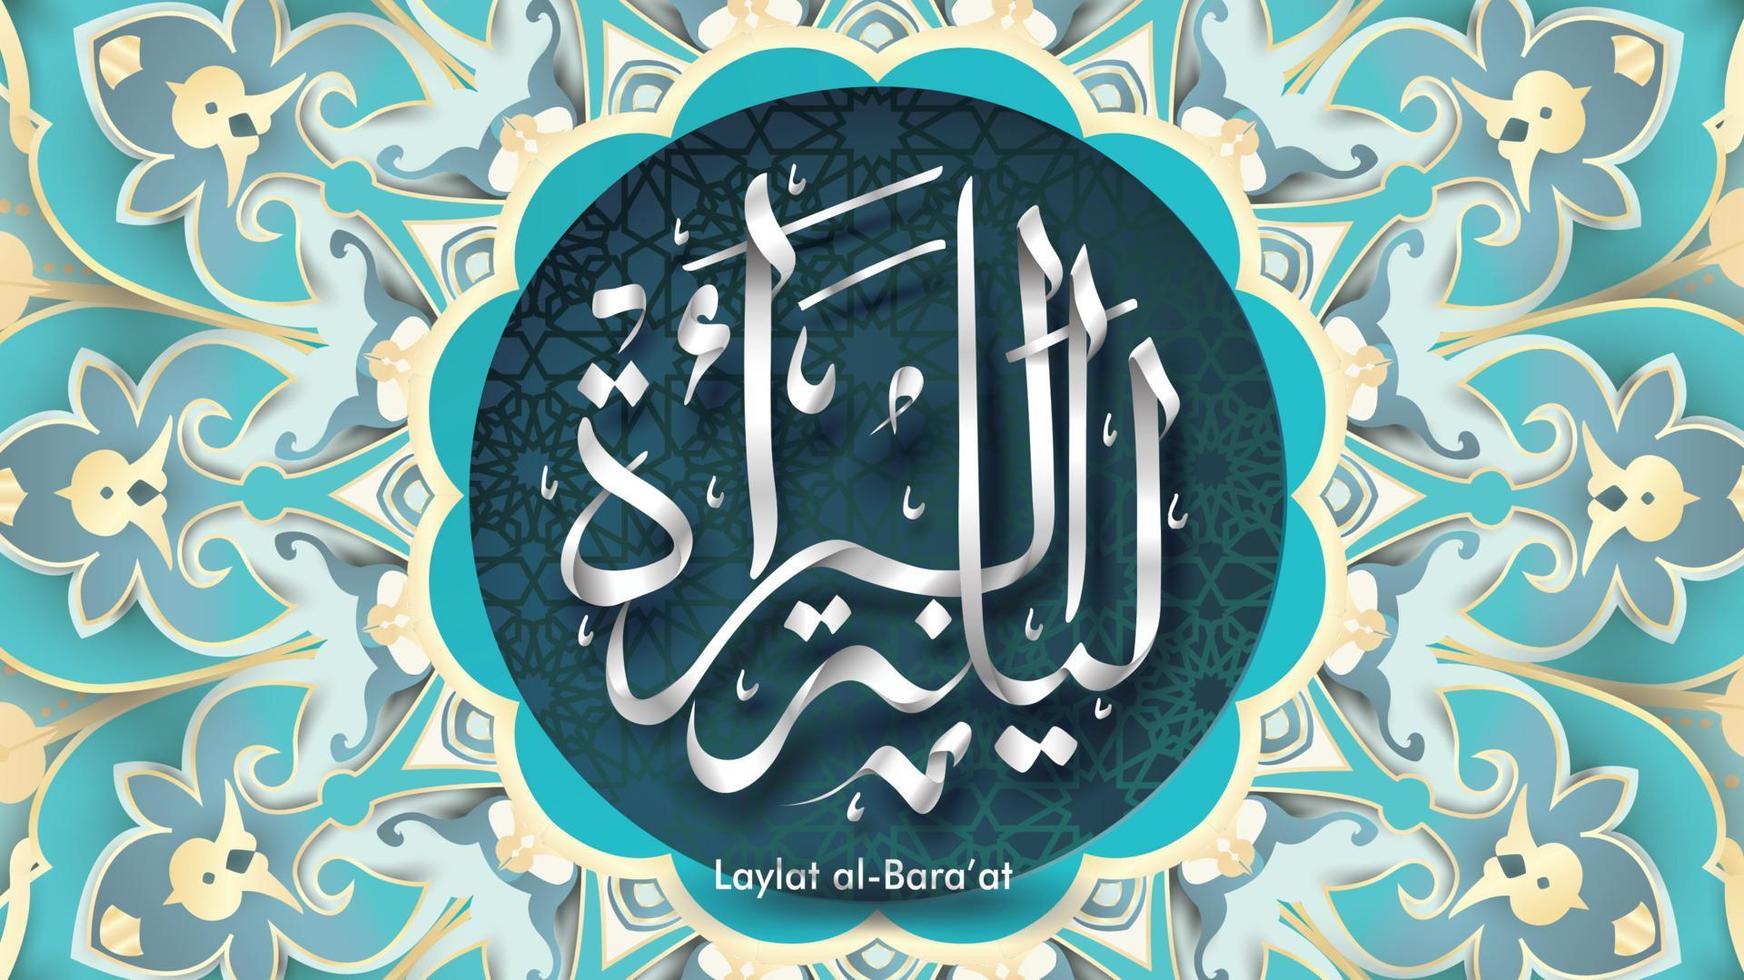 laylat al-bara au design de fond de carte de voeux de calligraphie arabe ramadan kareem. traduction - bara la nuit - vecteur